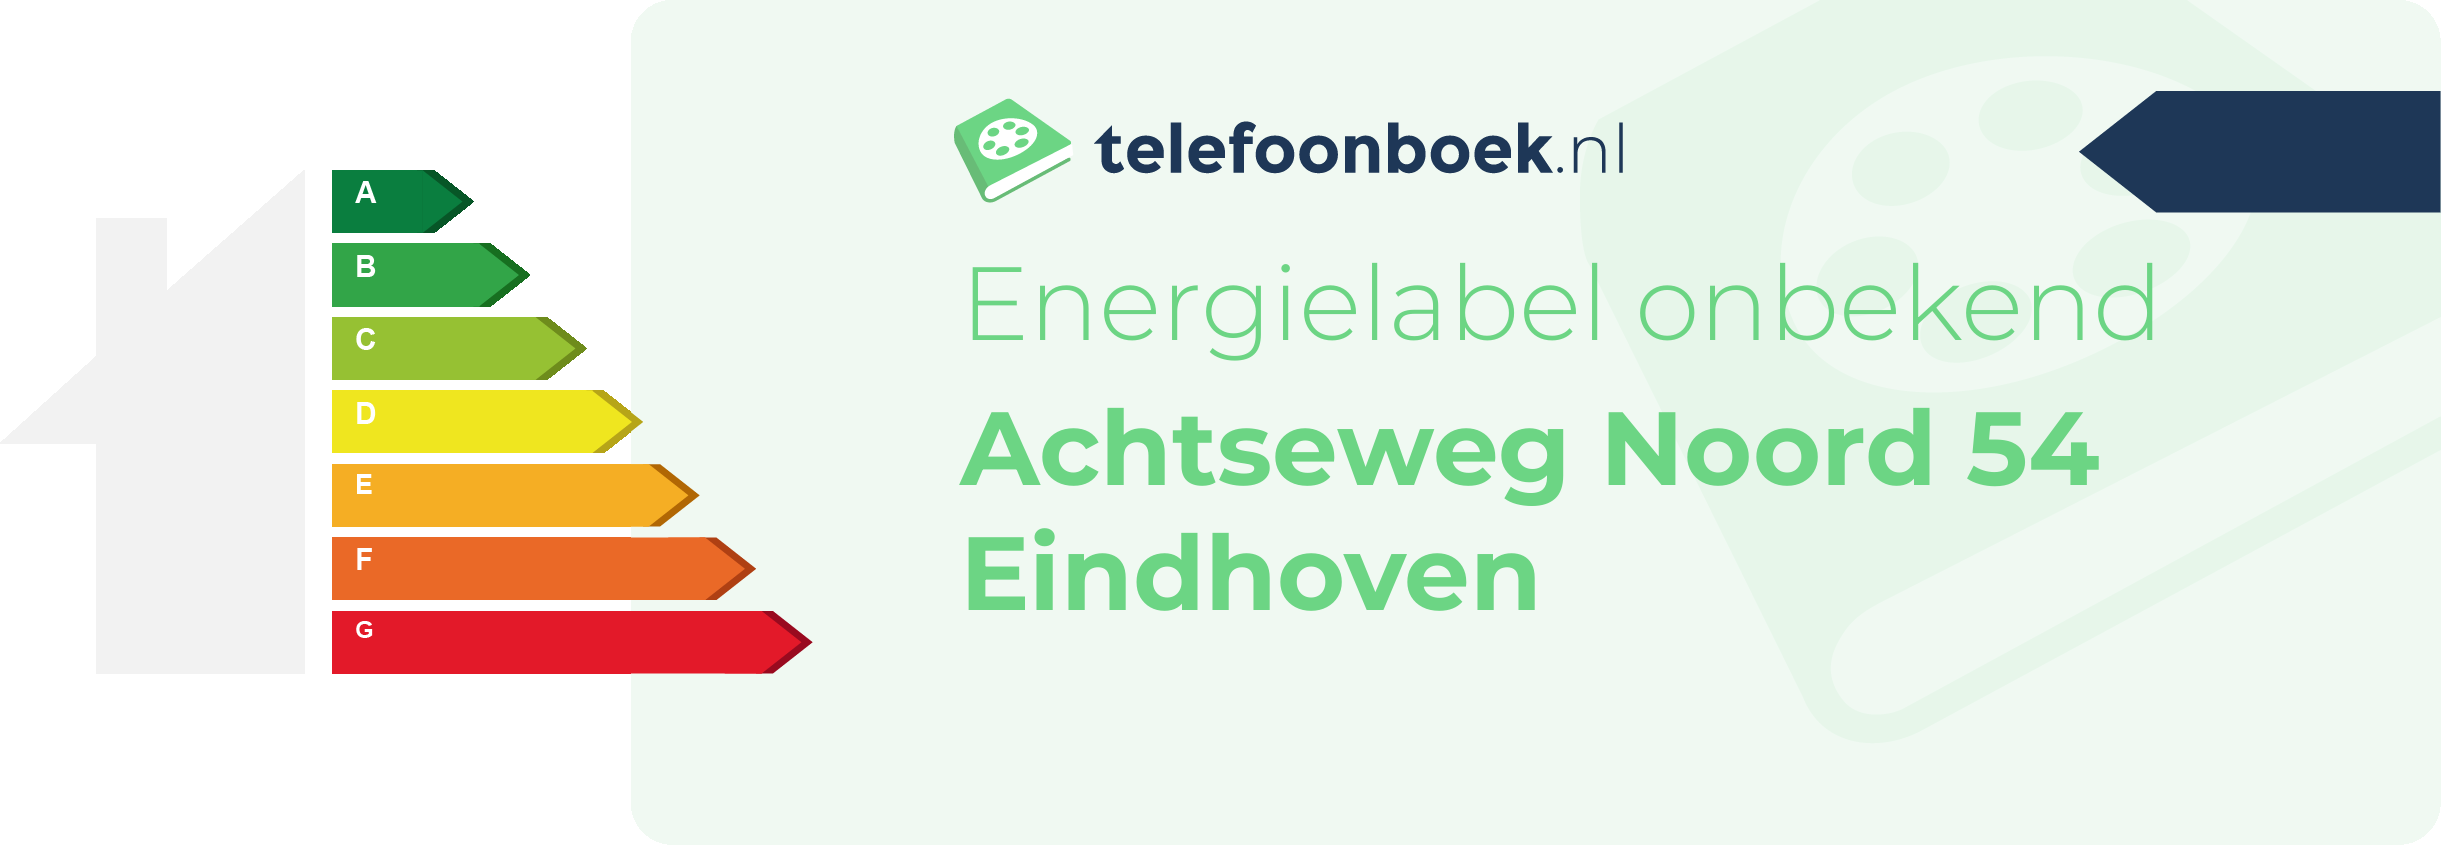 Energielabel Achtseweg Noord 54 Eindhoven